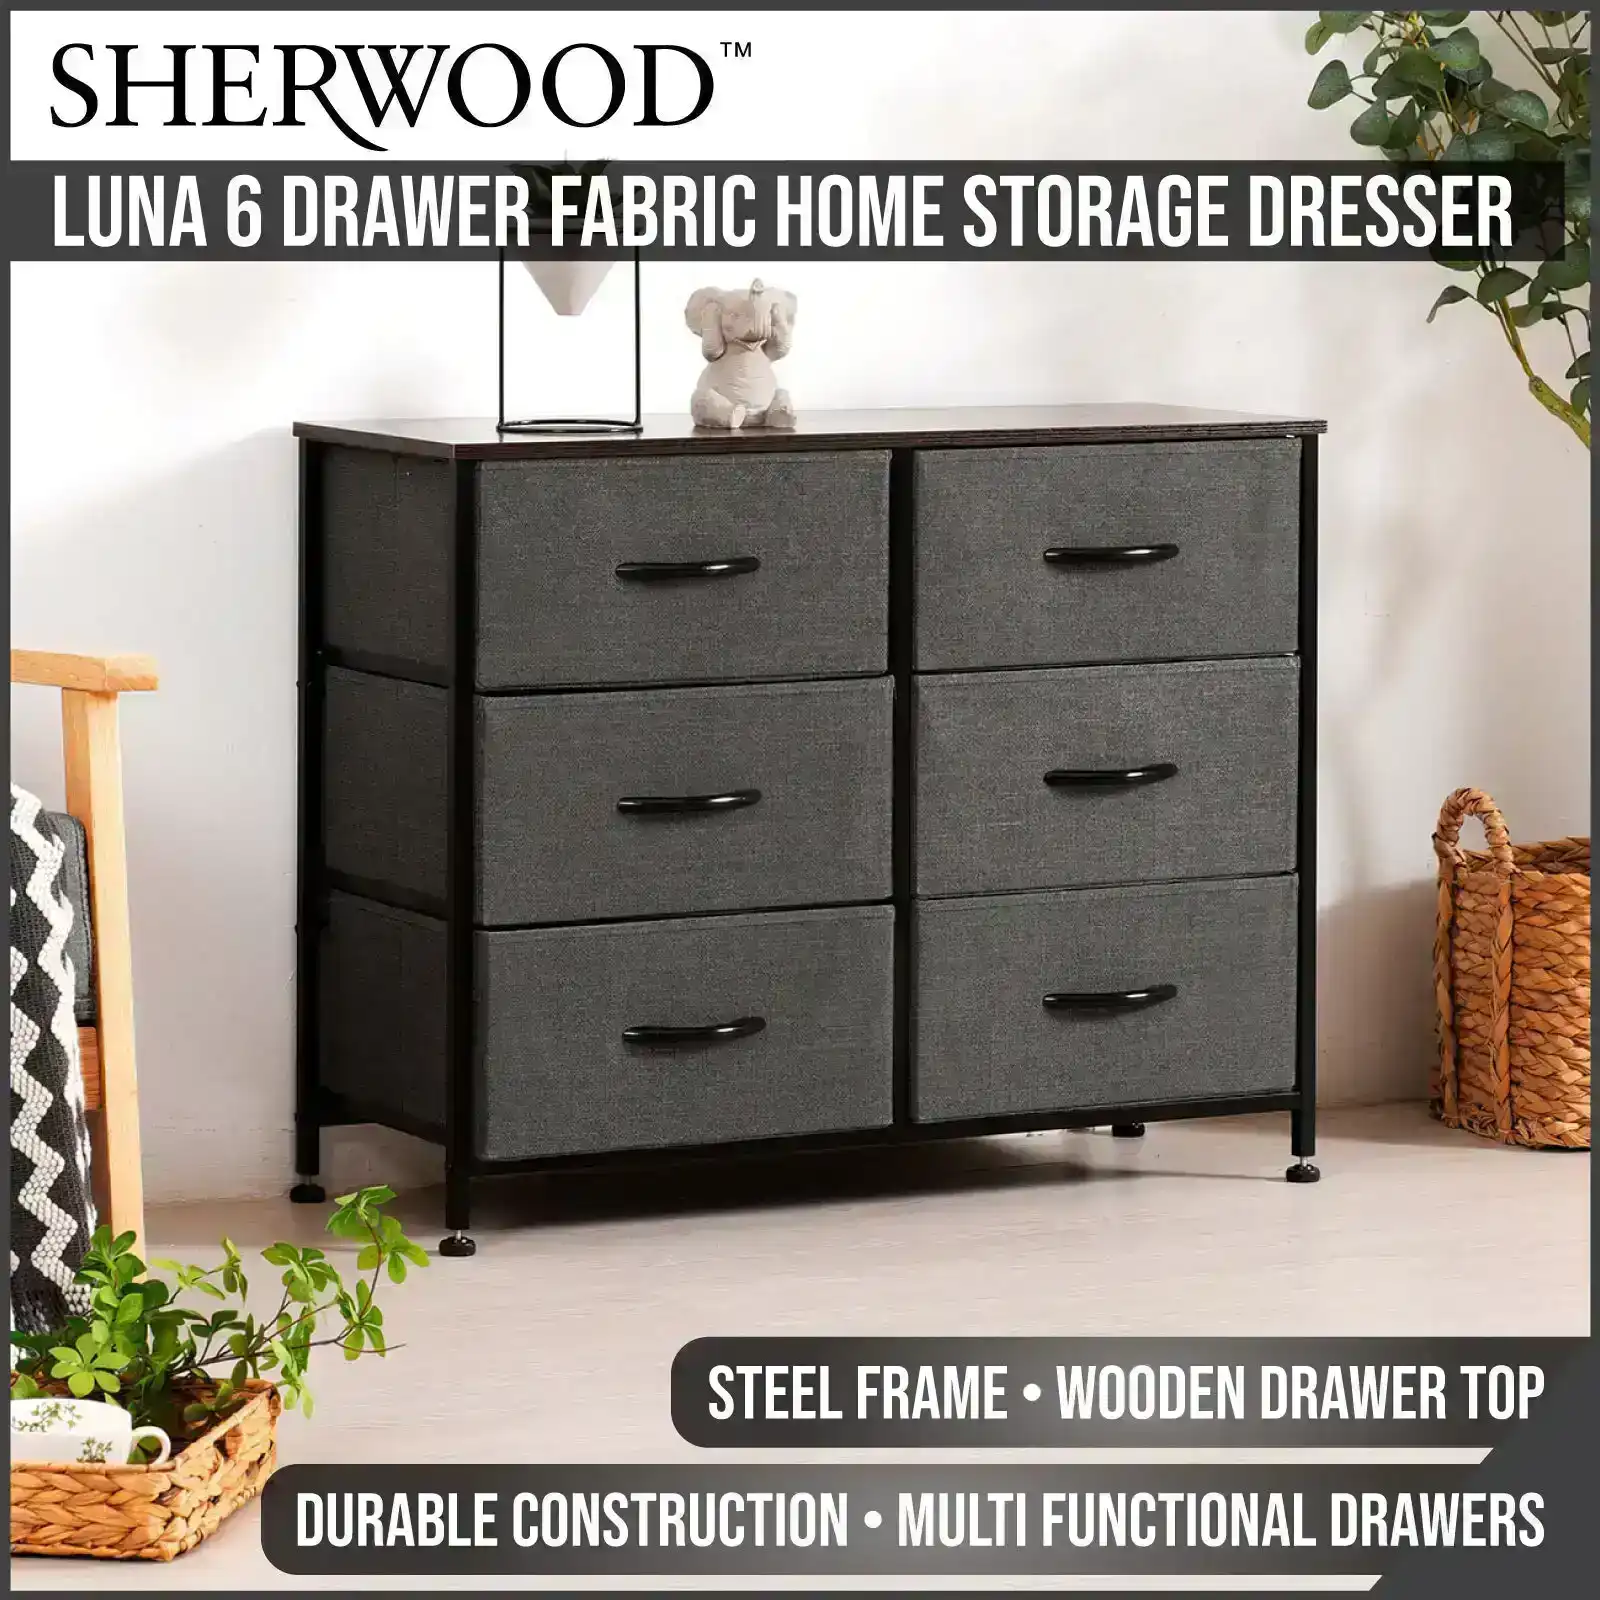 Sherwood Luna 6 Drawer Fabric Home Storage Dresser Charcoal 